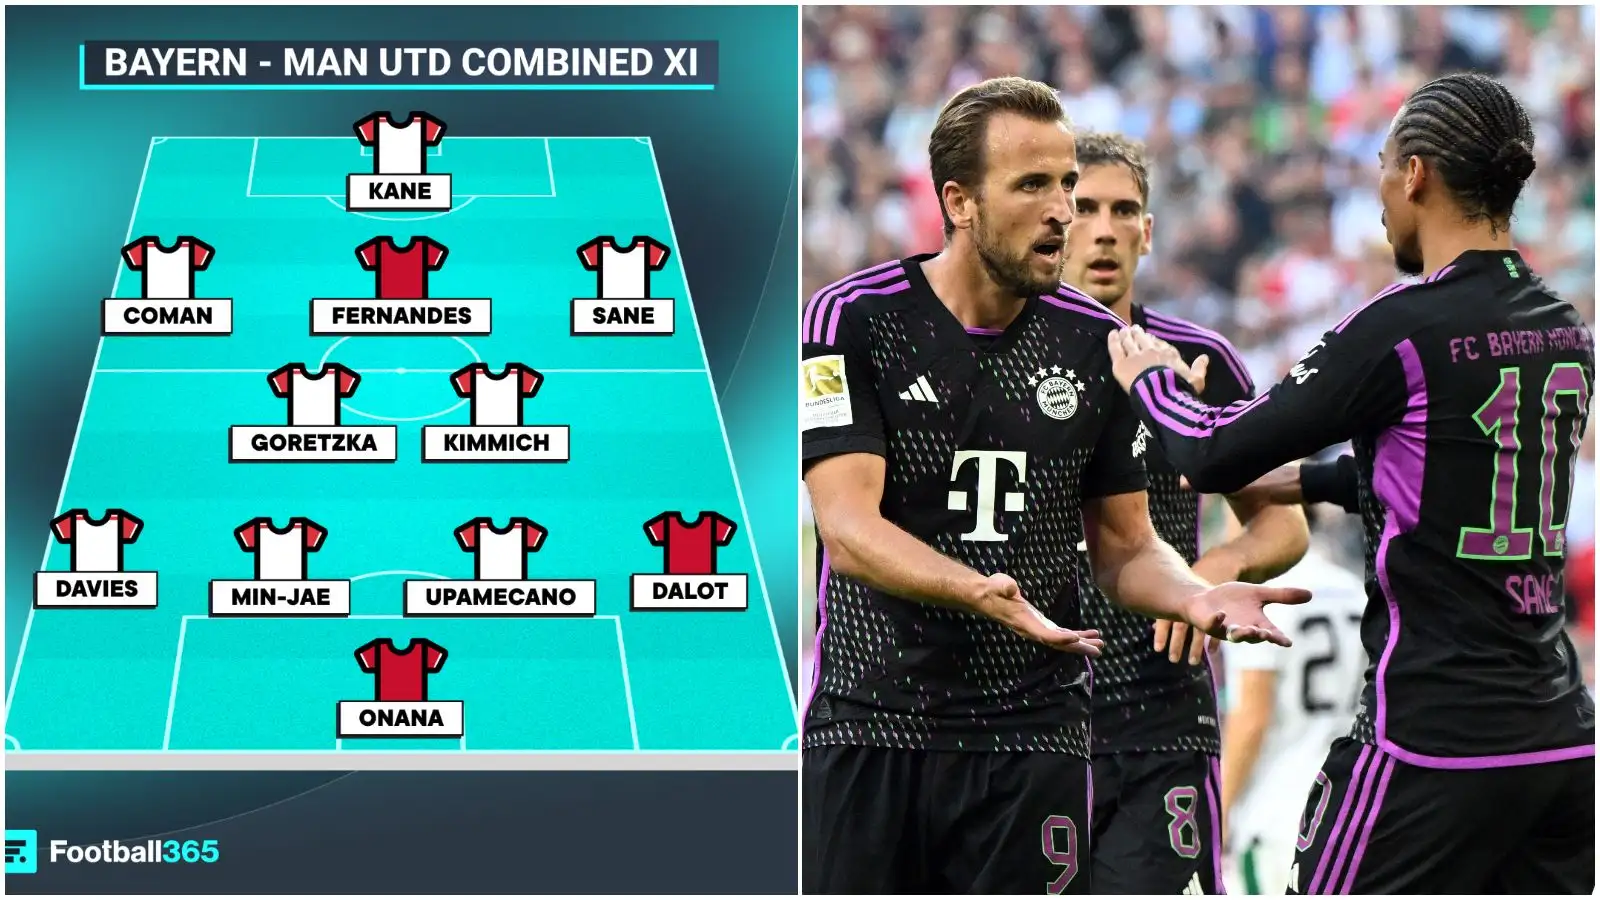 Bayern - Man Utd combined XI features Harry Kane.